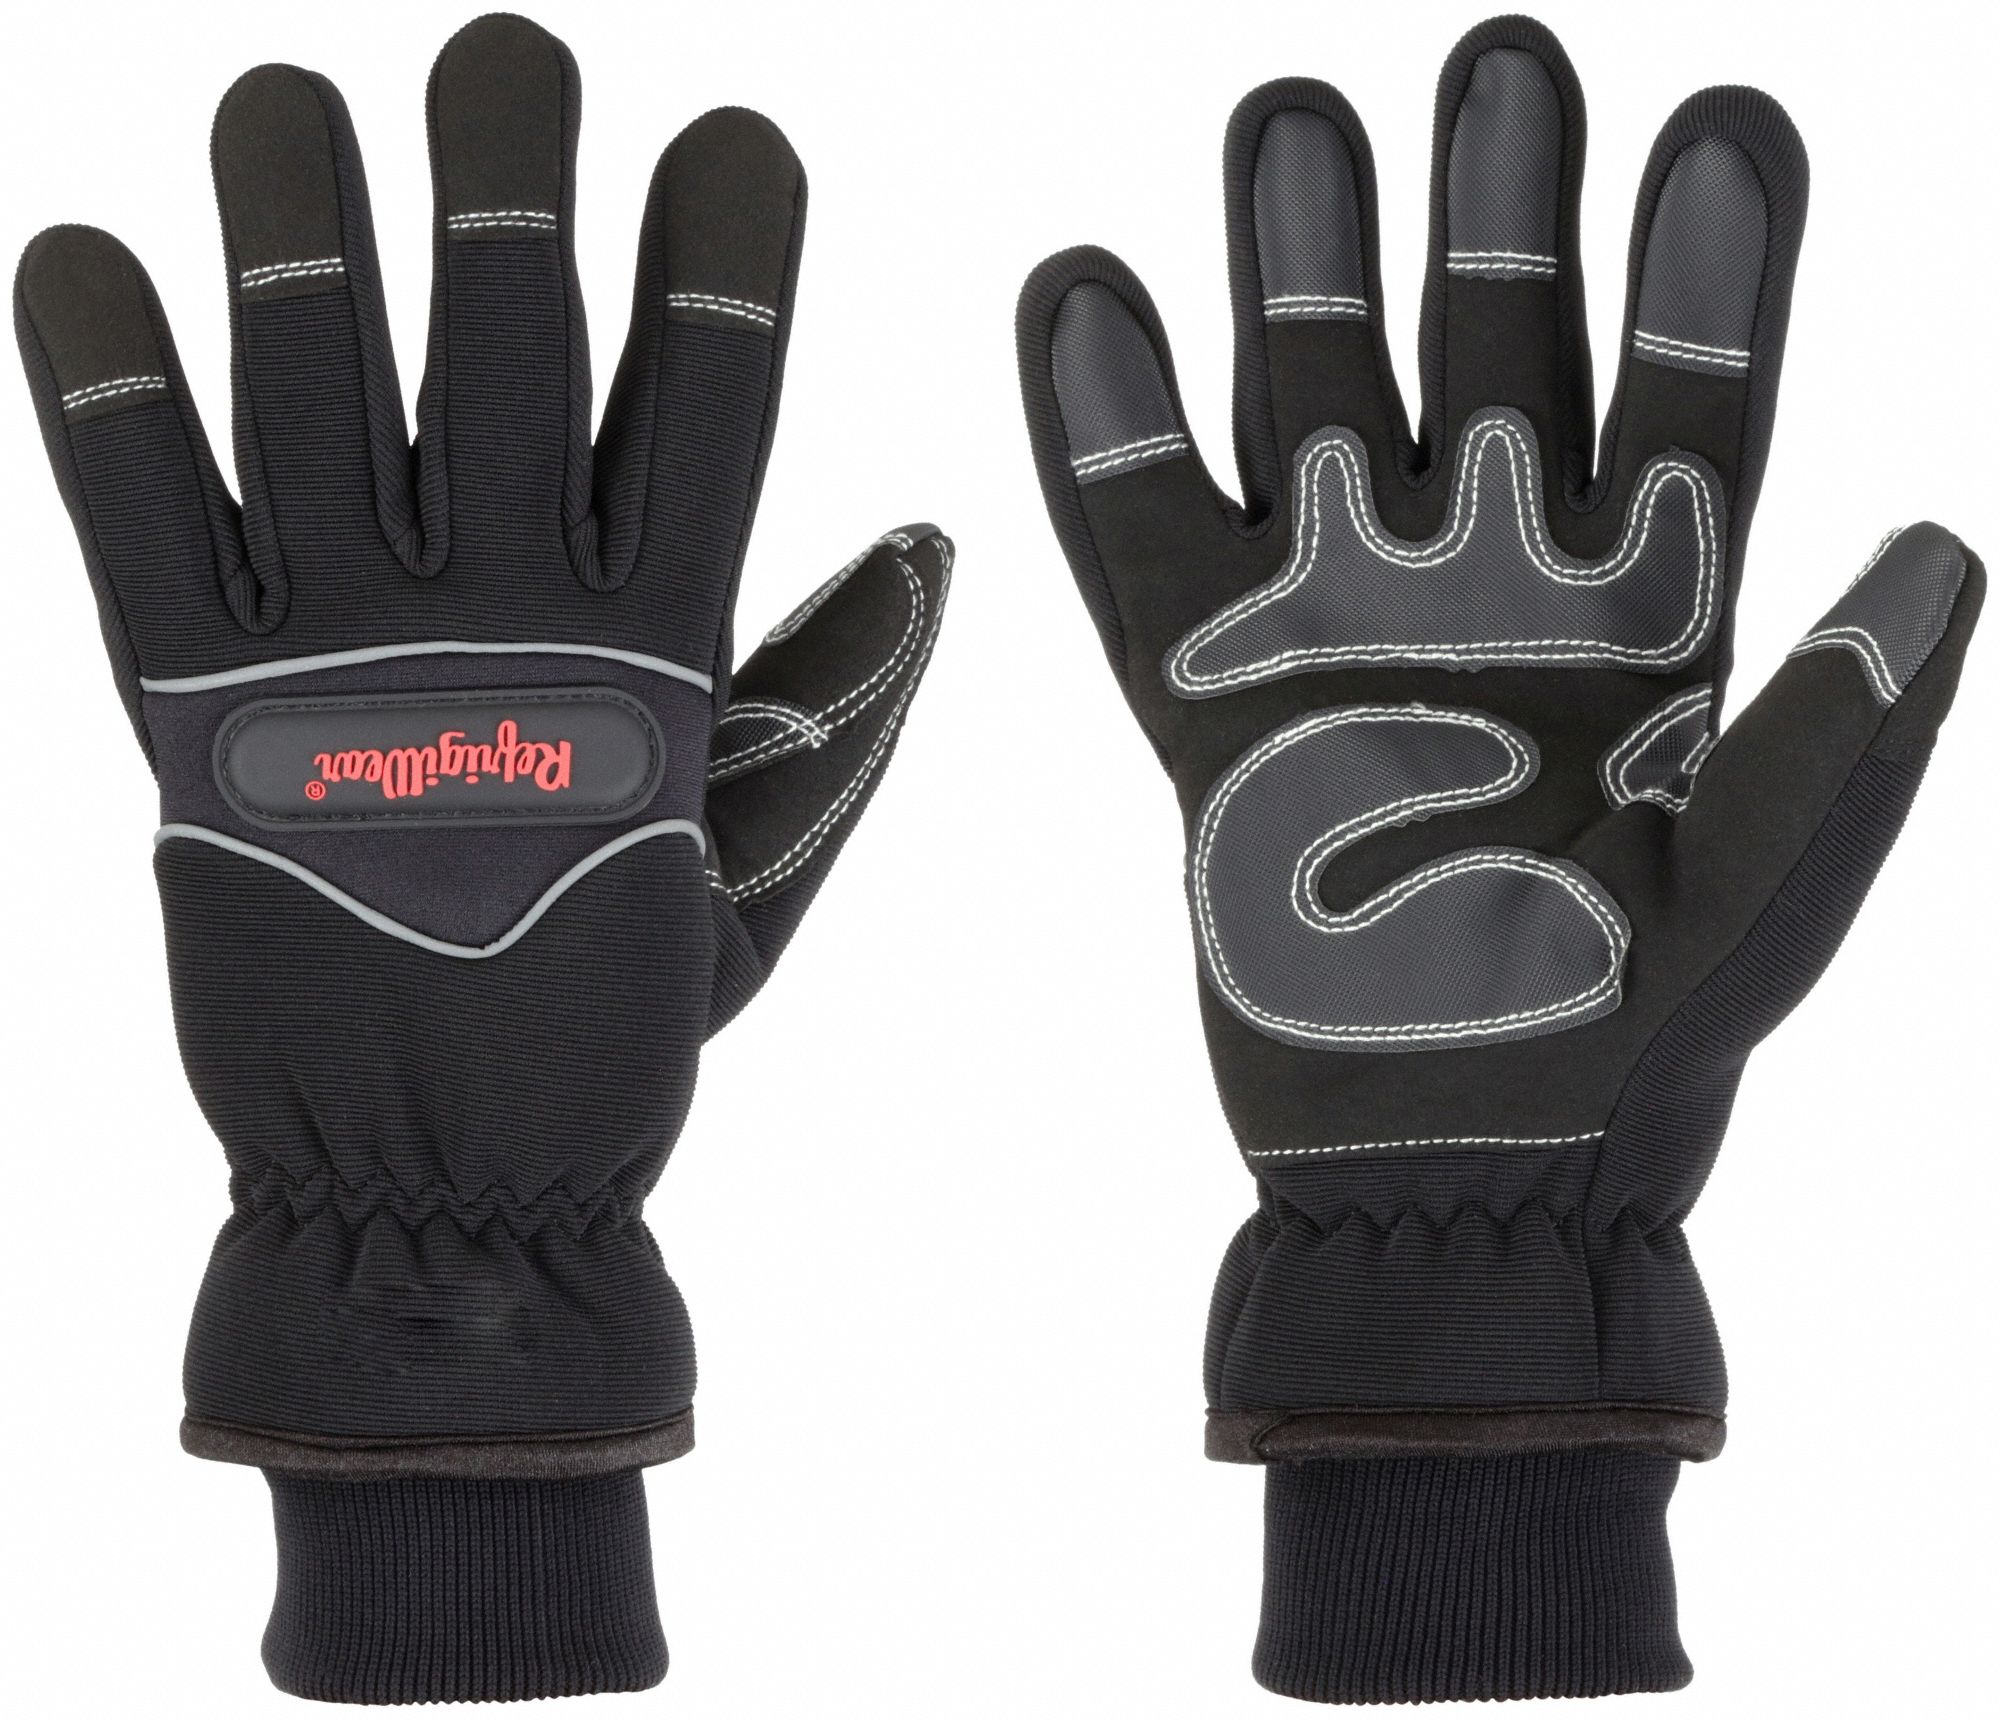 REFRIGIWEAR Mechanics Gloves: M ( 8 ), -20°F Min Temp, Synthetic Leather  with PVC Grip, Black, 1 PR